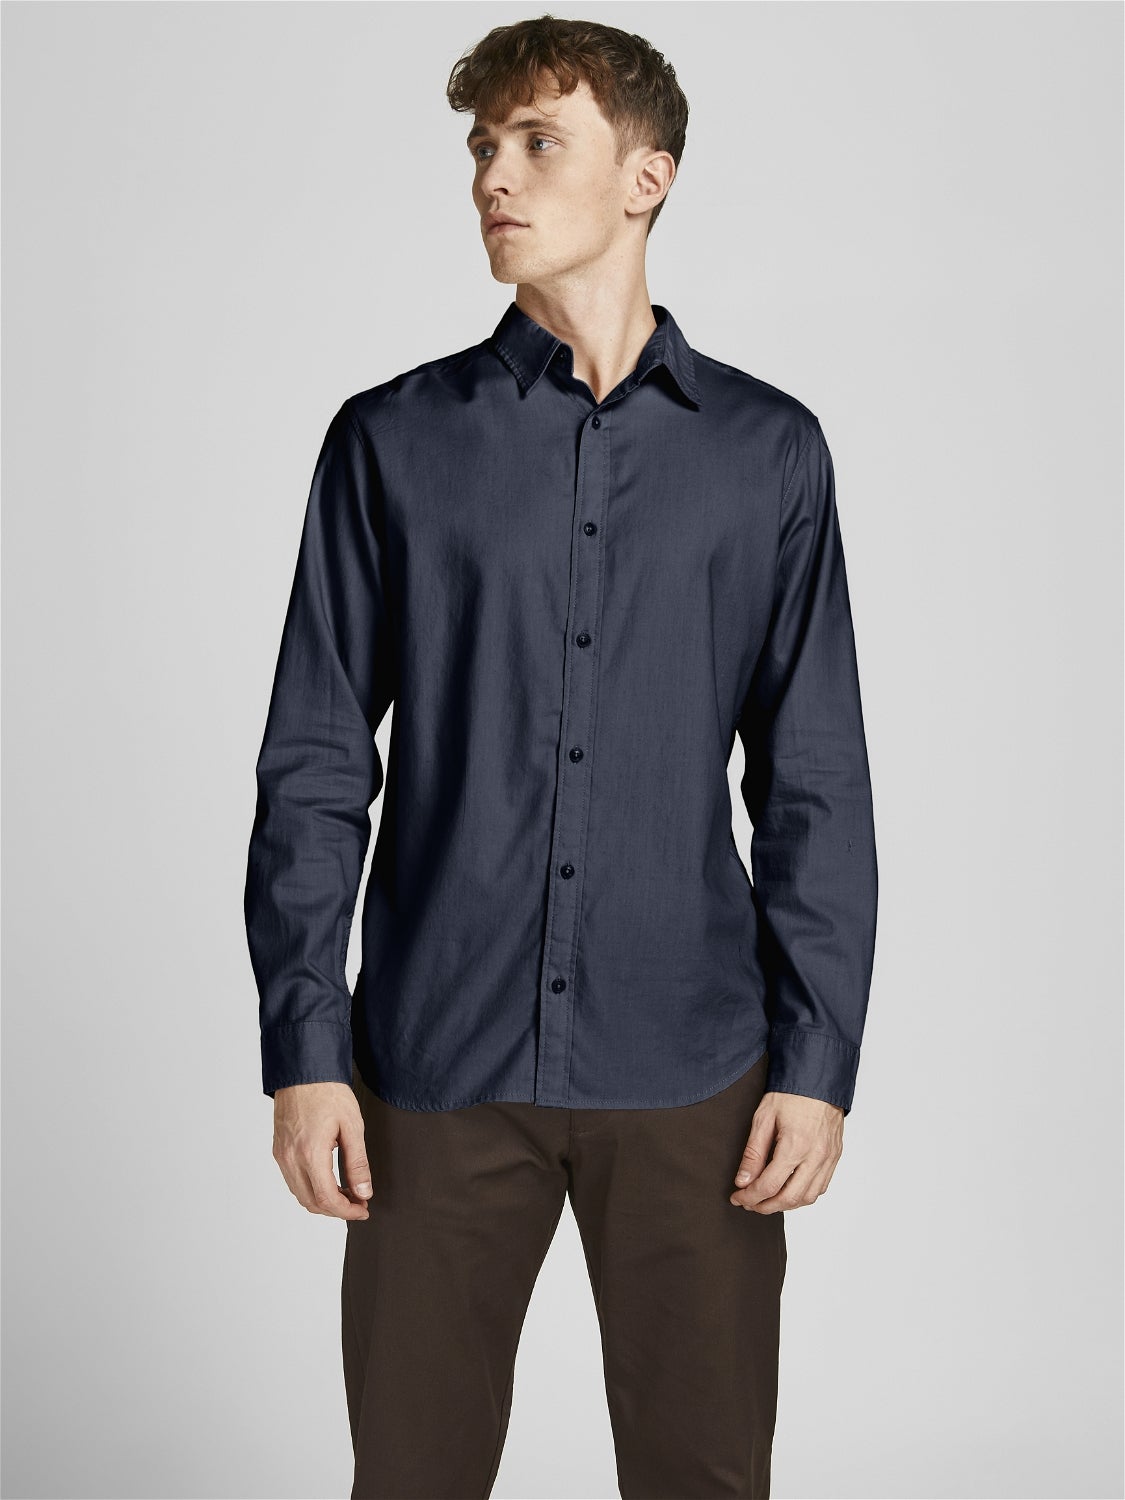 MODA UOMO Camicie & T-shirt Tailored fit Pull&Bear T-shirt sconto 68% Blu navy S 